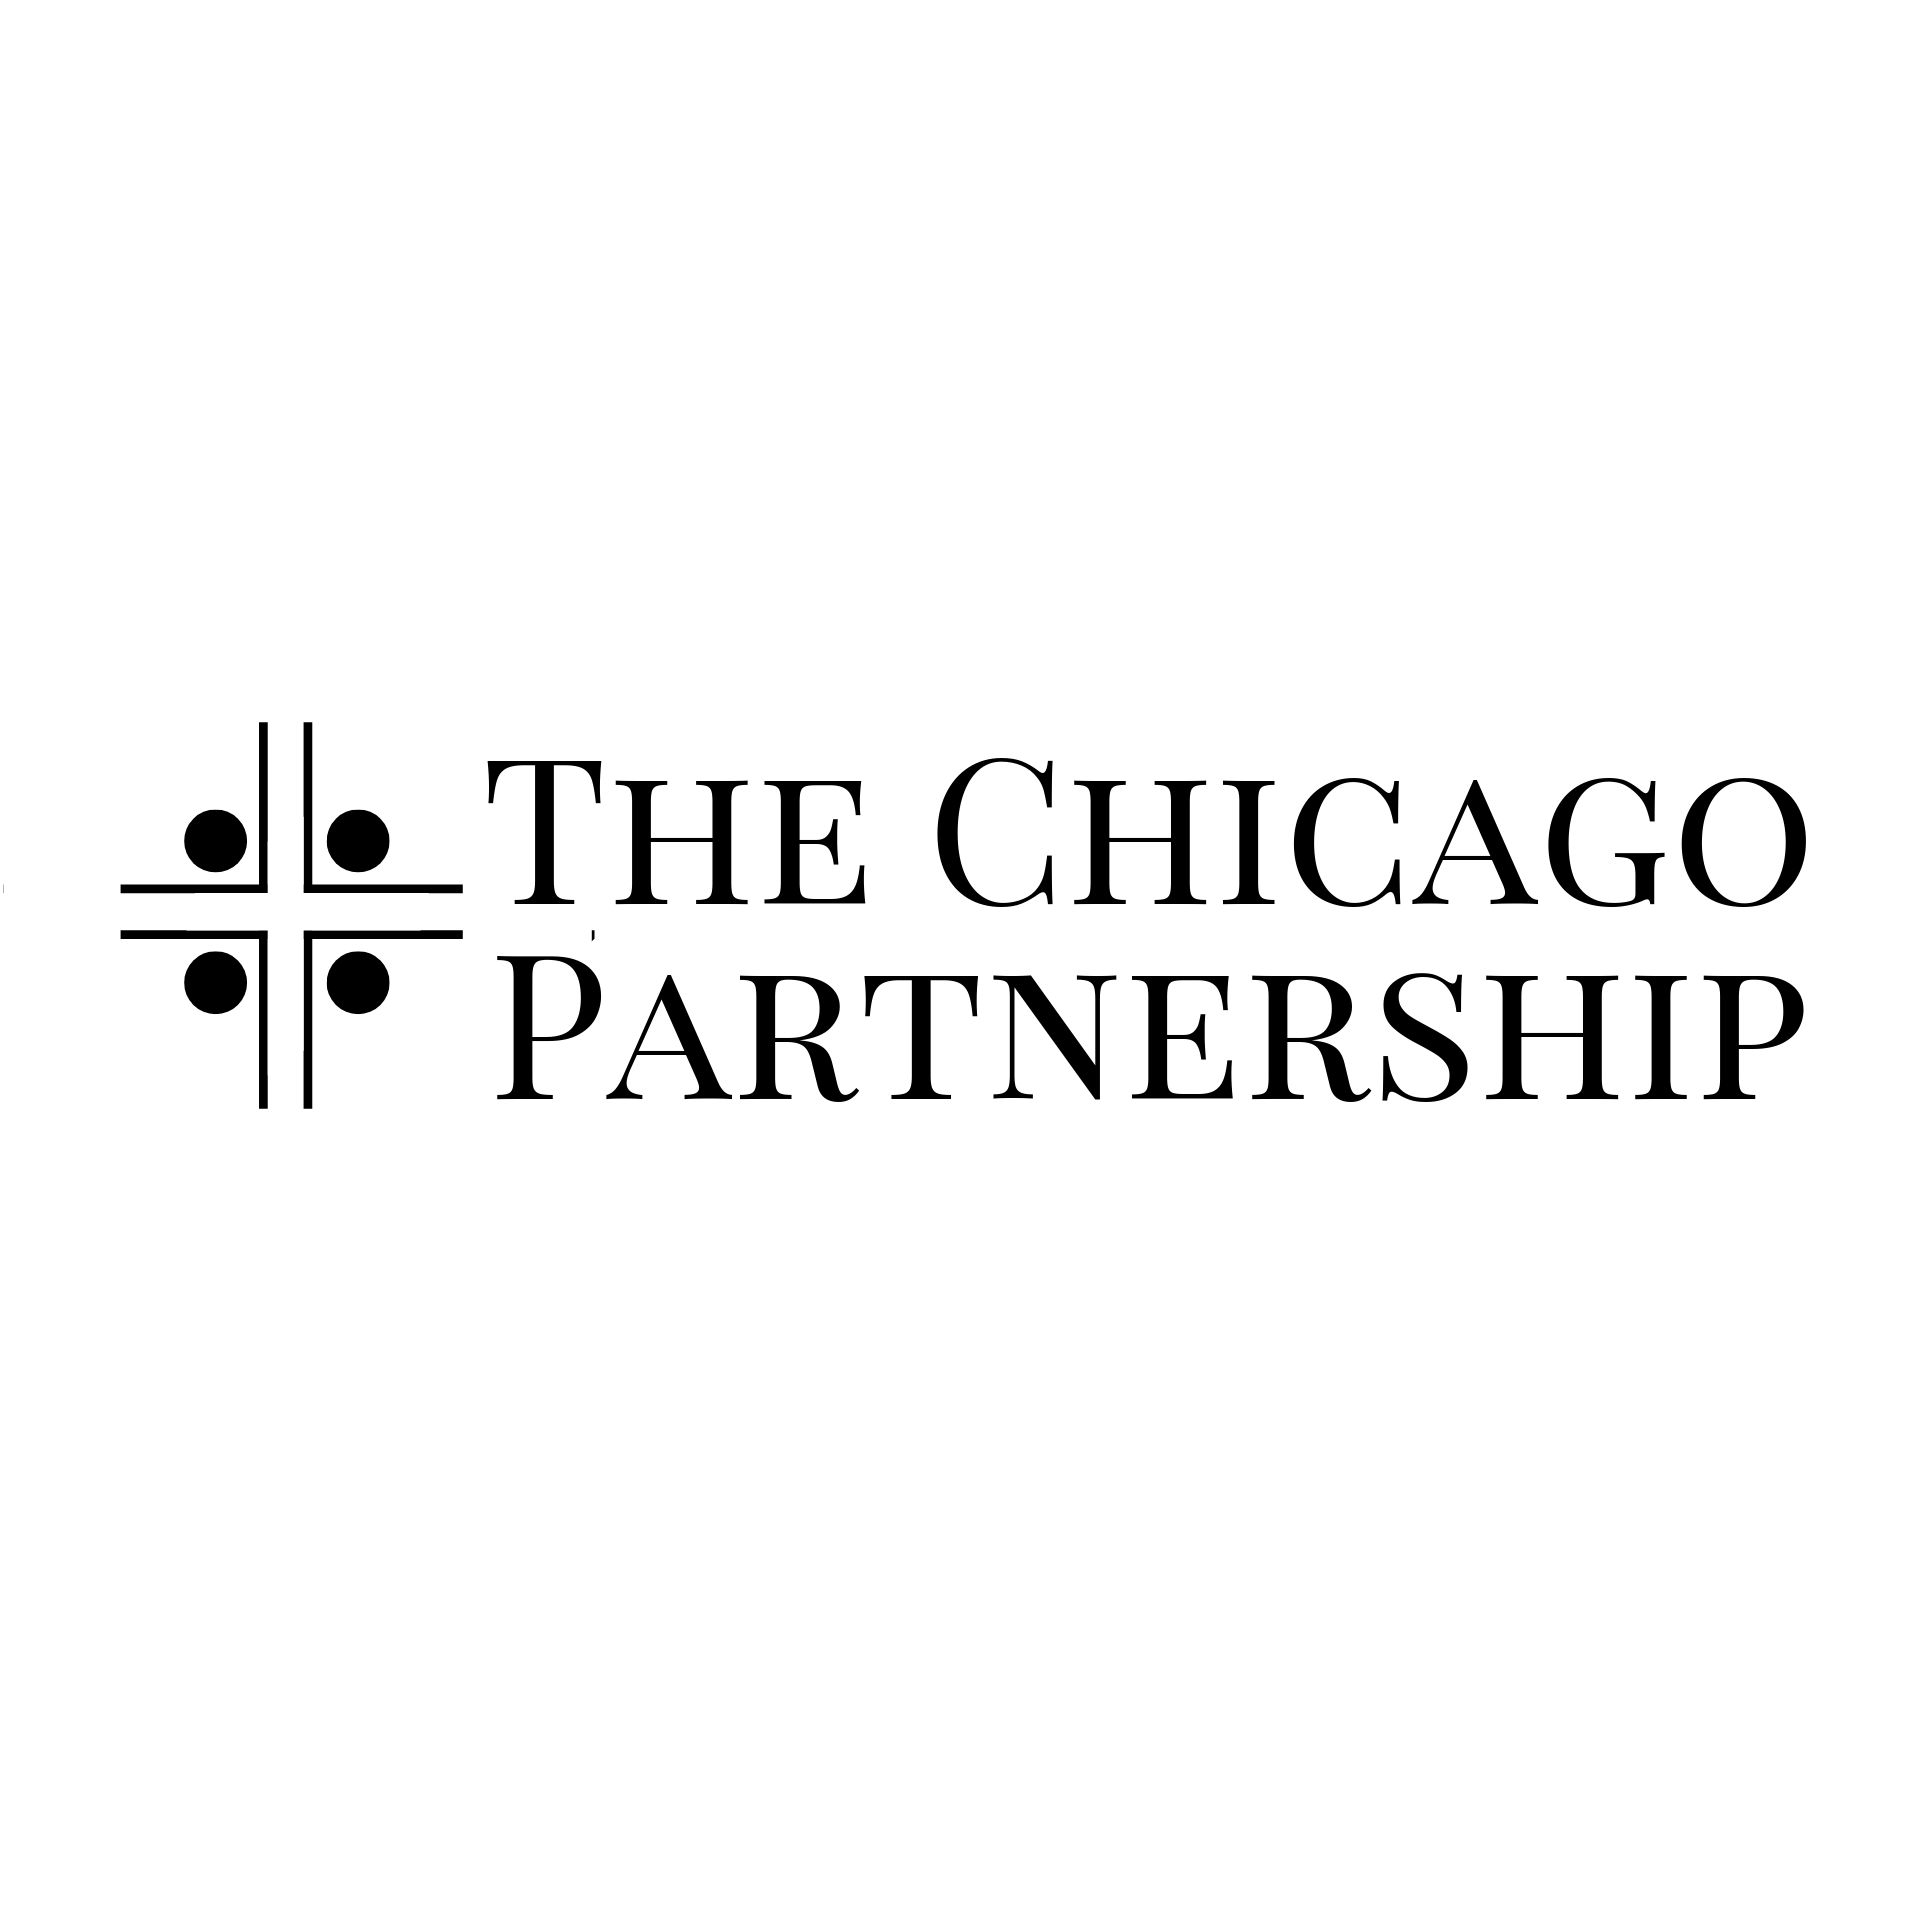 The Chicago Partnership